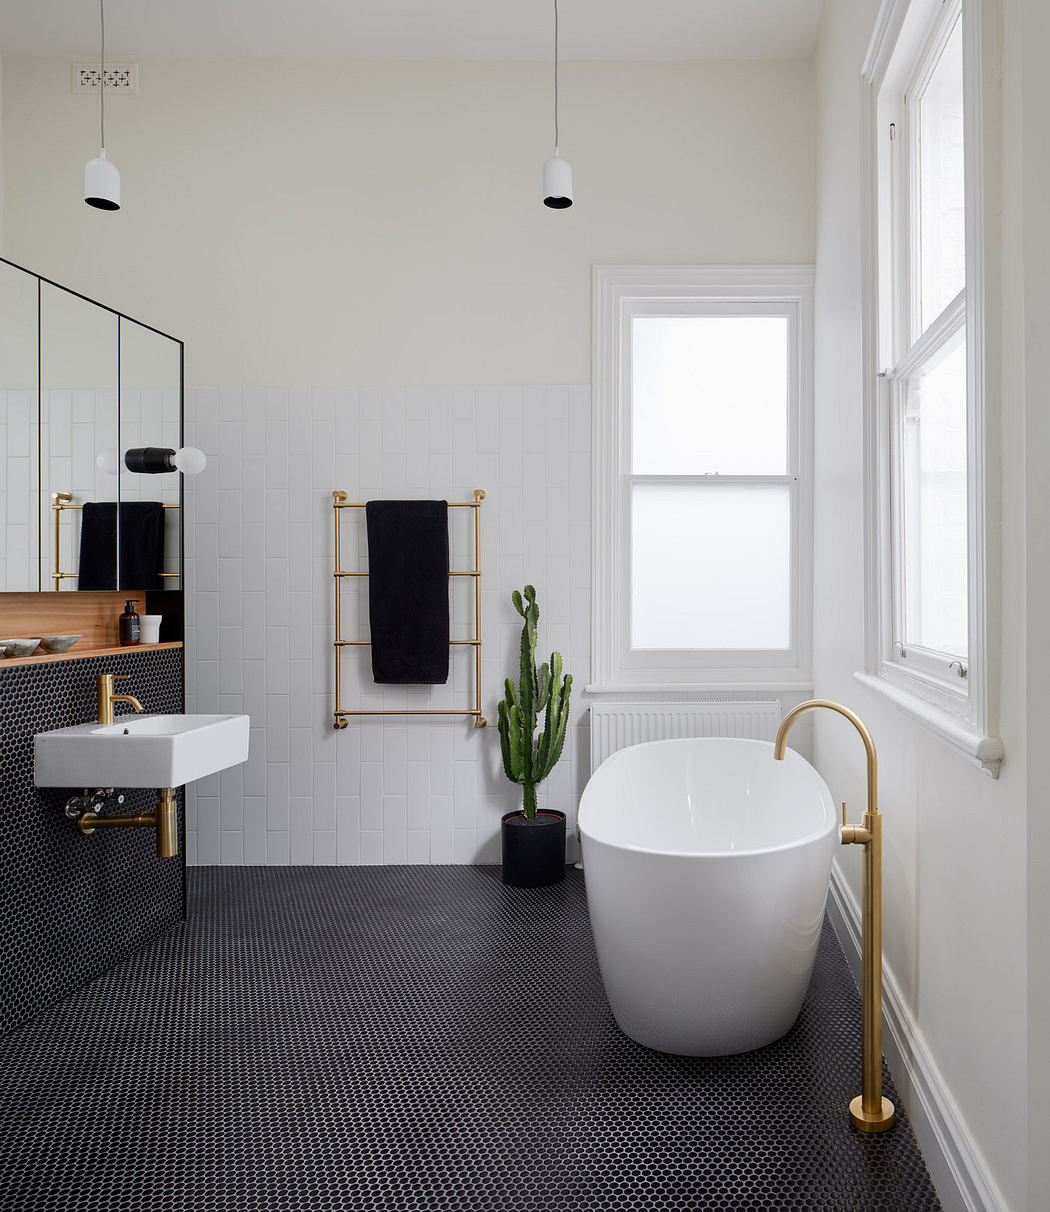 Modern bathroom with white freestanding tub, black hexagonal tiles, and gold